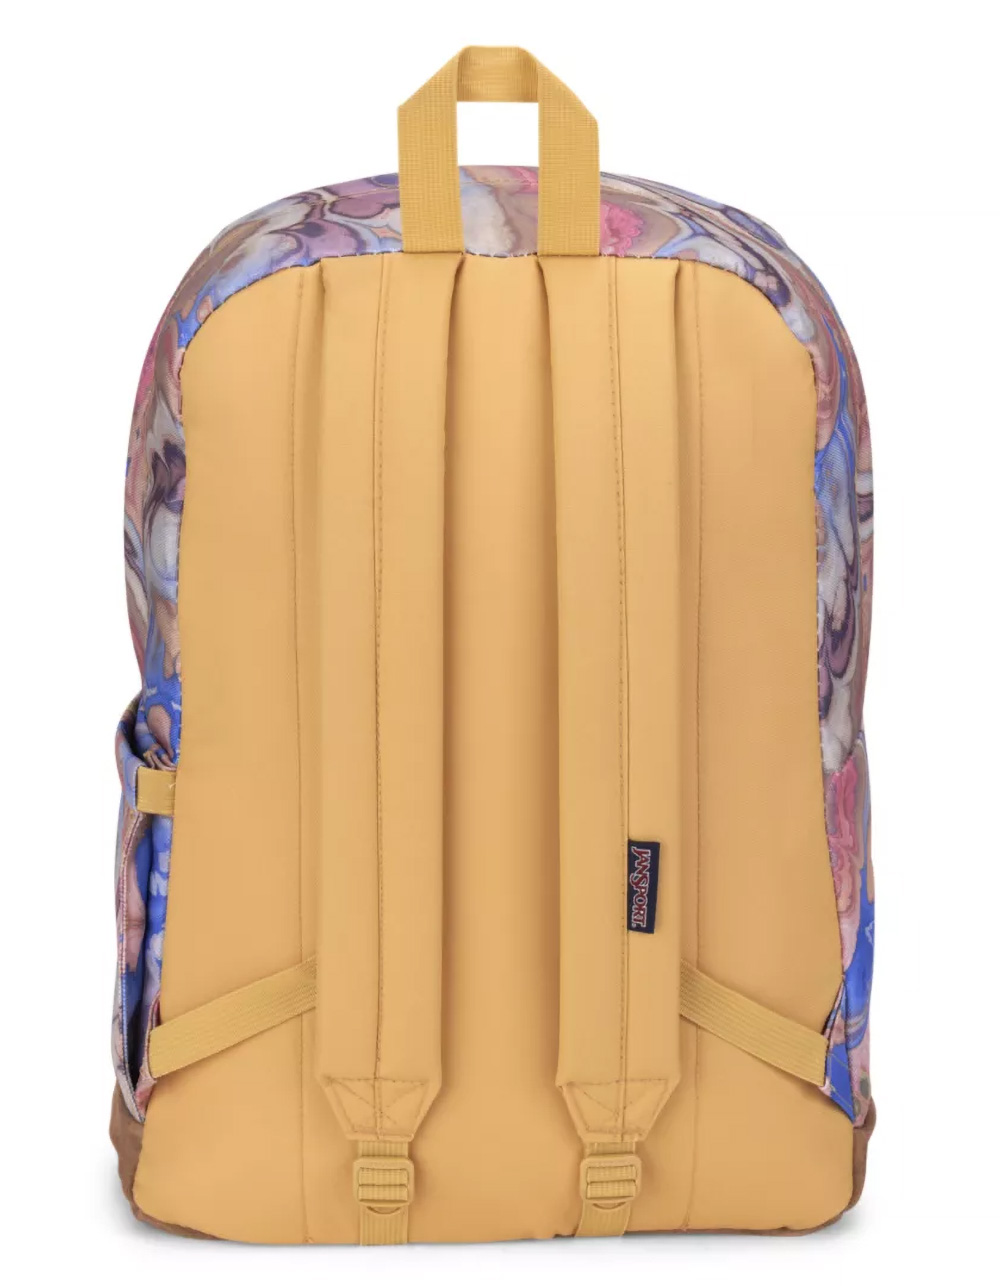 JANSPORT Right Pack Backpack - MARBLE MOOD | Tillys